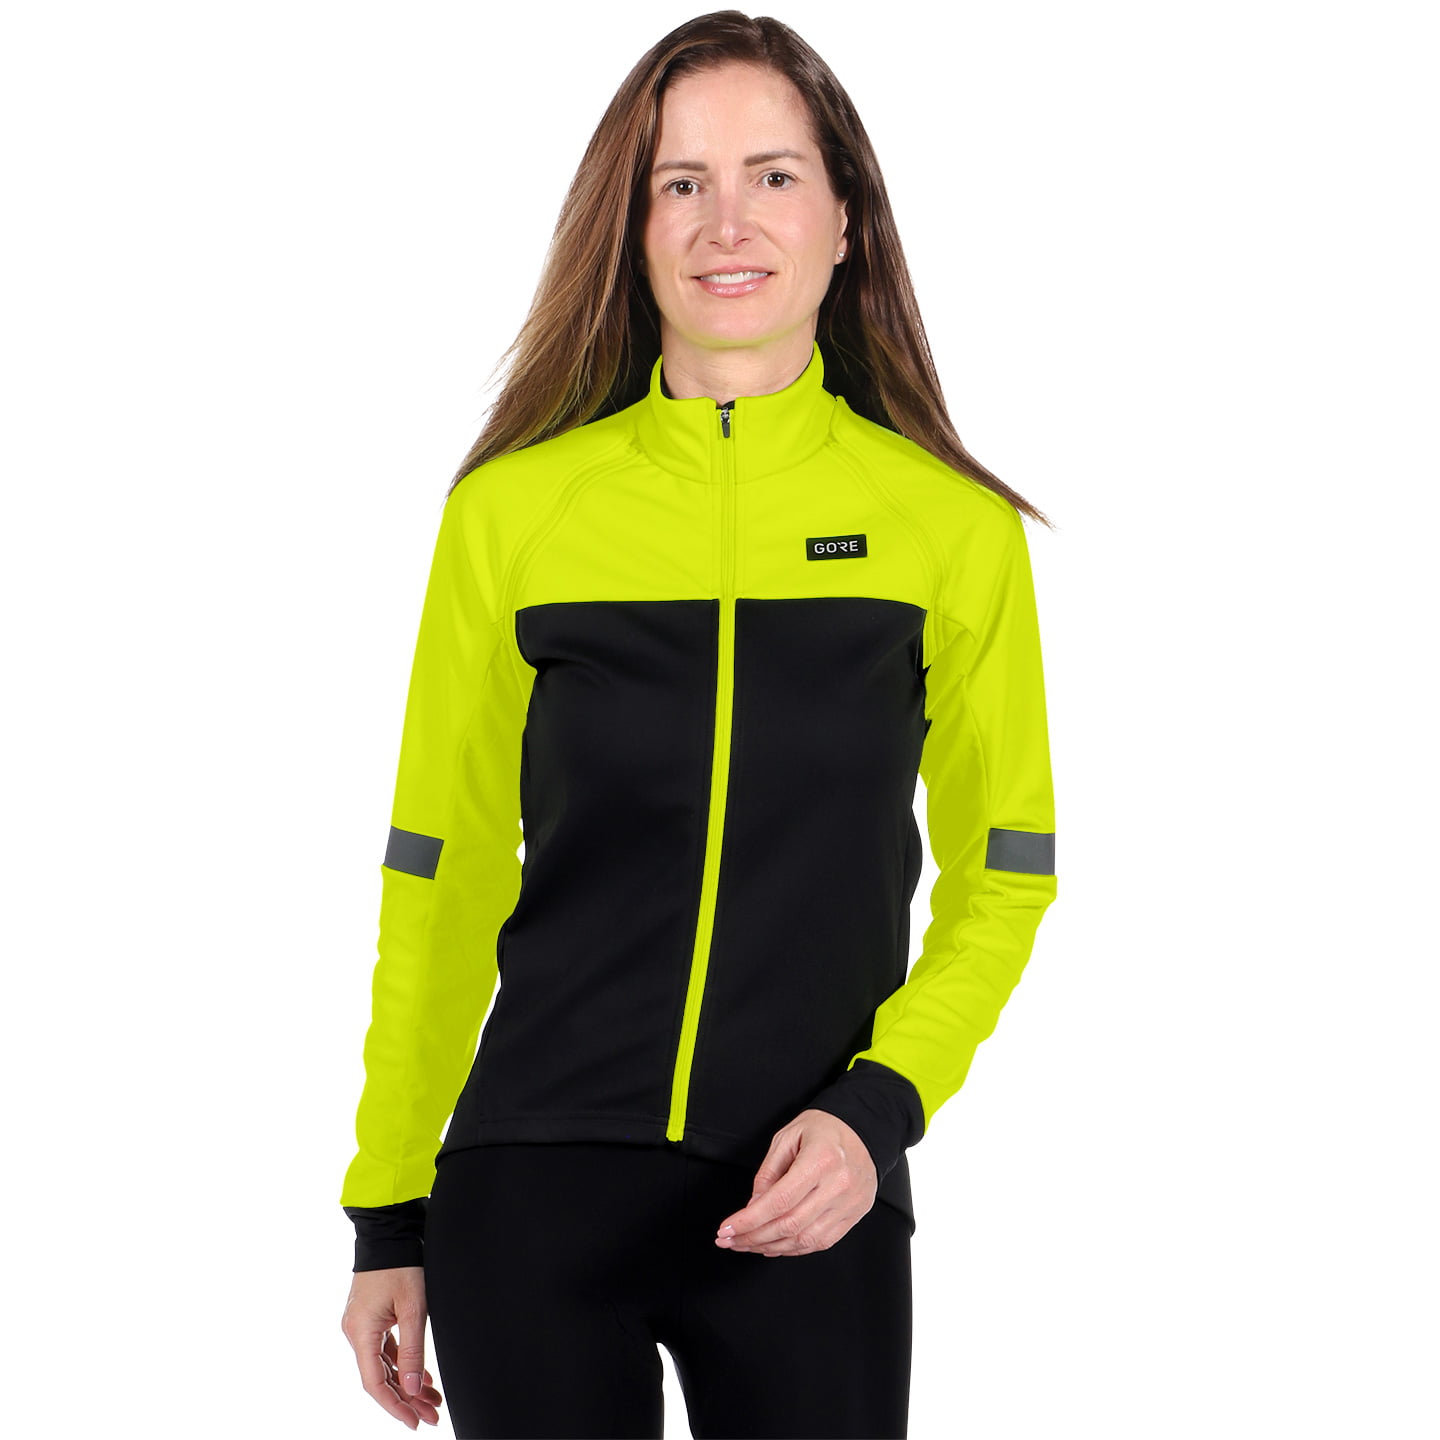 Phantom Women’s Cycling Jacket Women’s Cycling Jacket, size 40, Bike jacket, Cycle gear